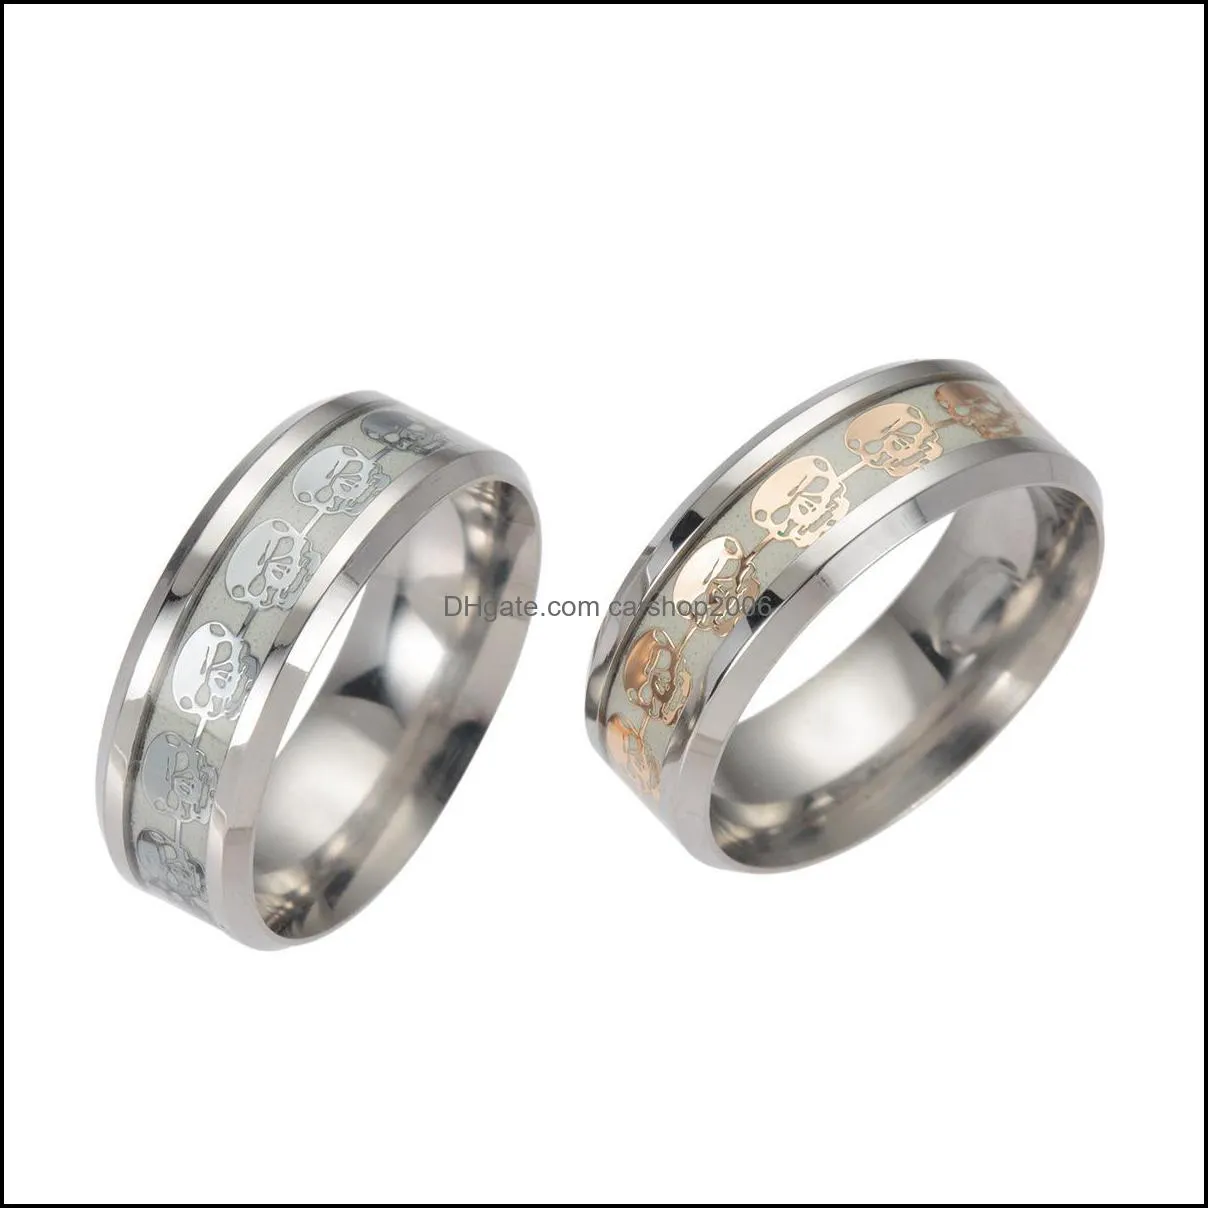 pretty mens rings luminous creative rings glow in the dark male beautifully jewelry skull rings for men